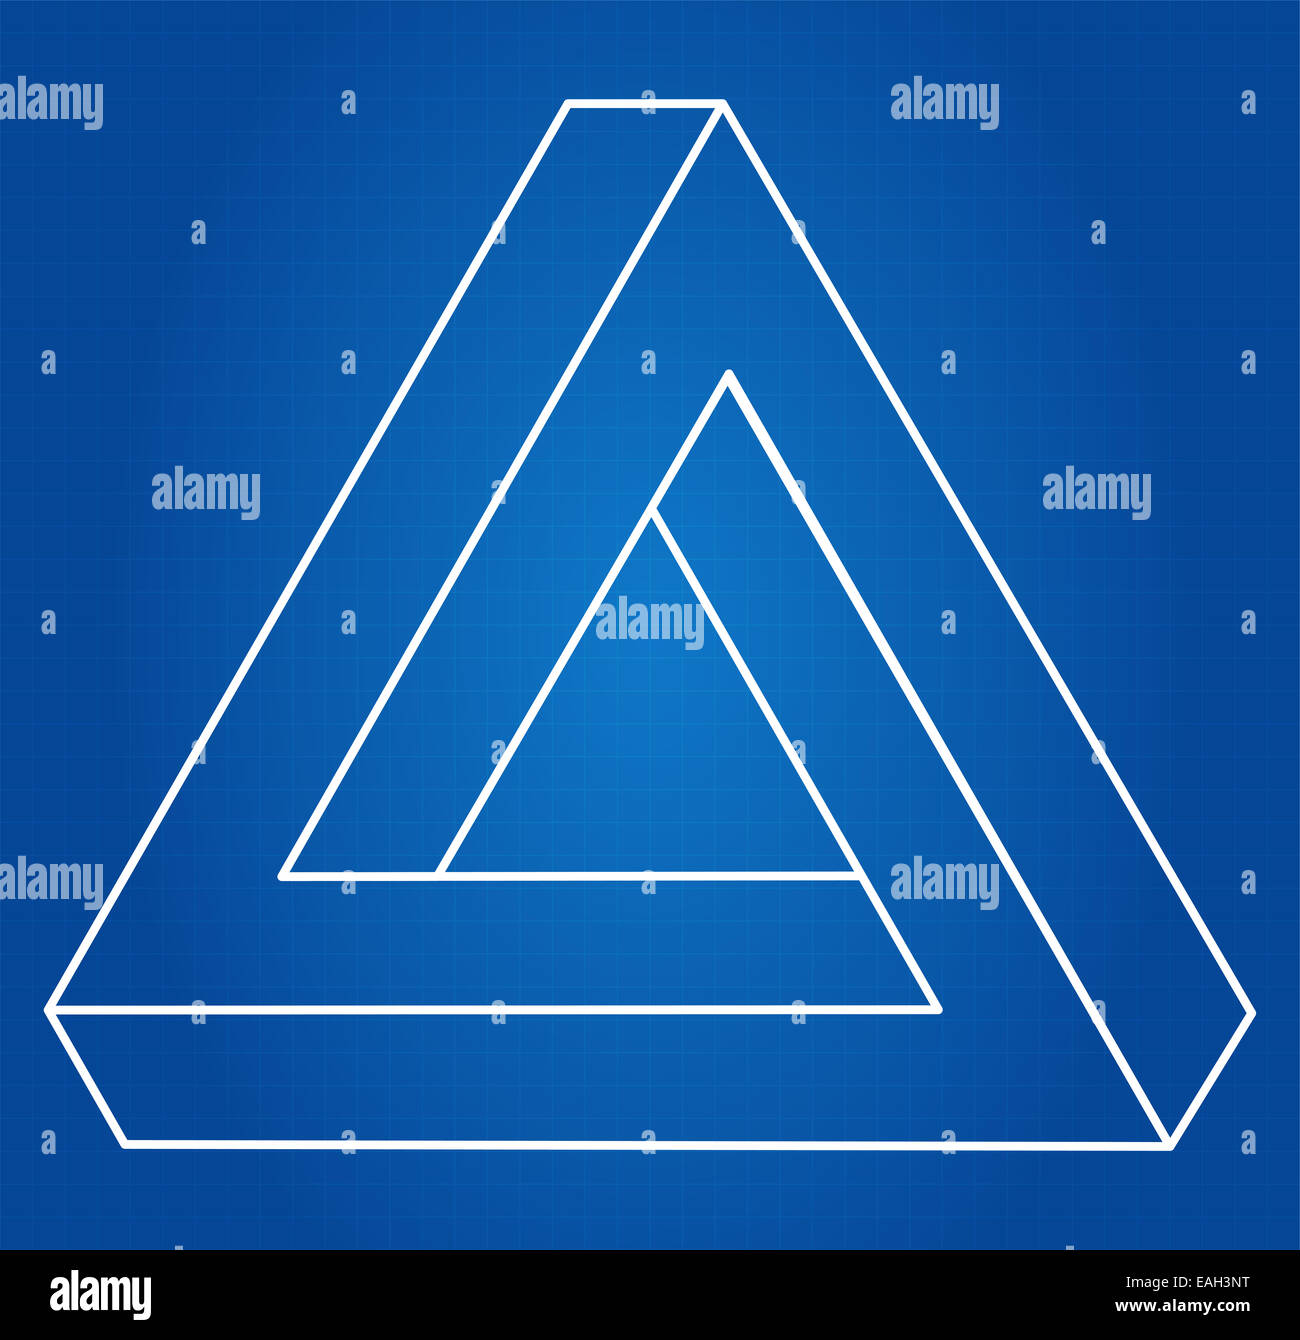 Impossible Triangle Optical Illusion Blueprint Stock Photo - Alamy